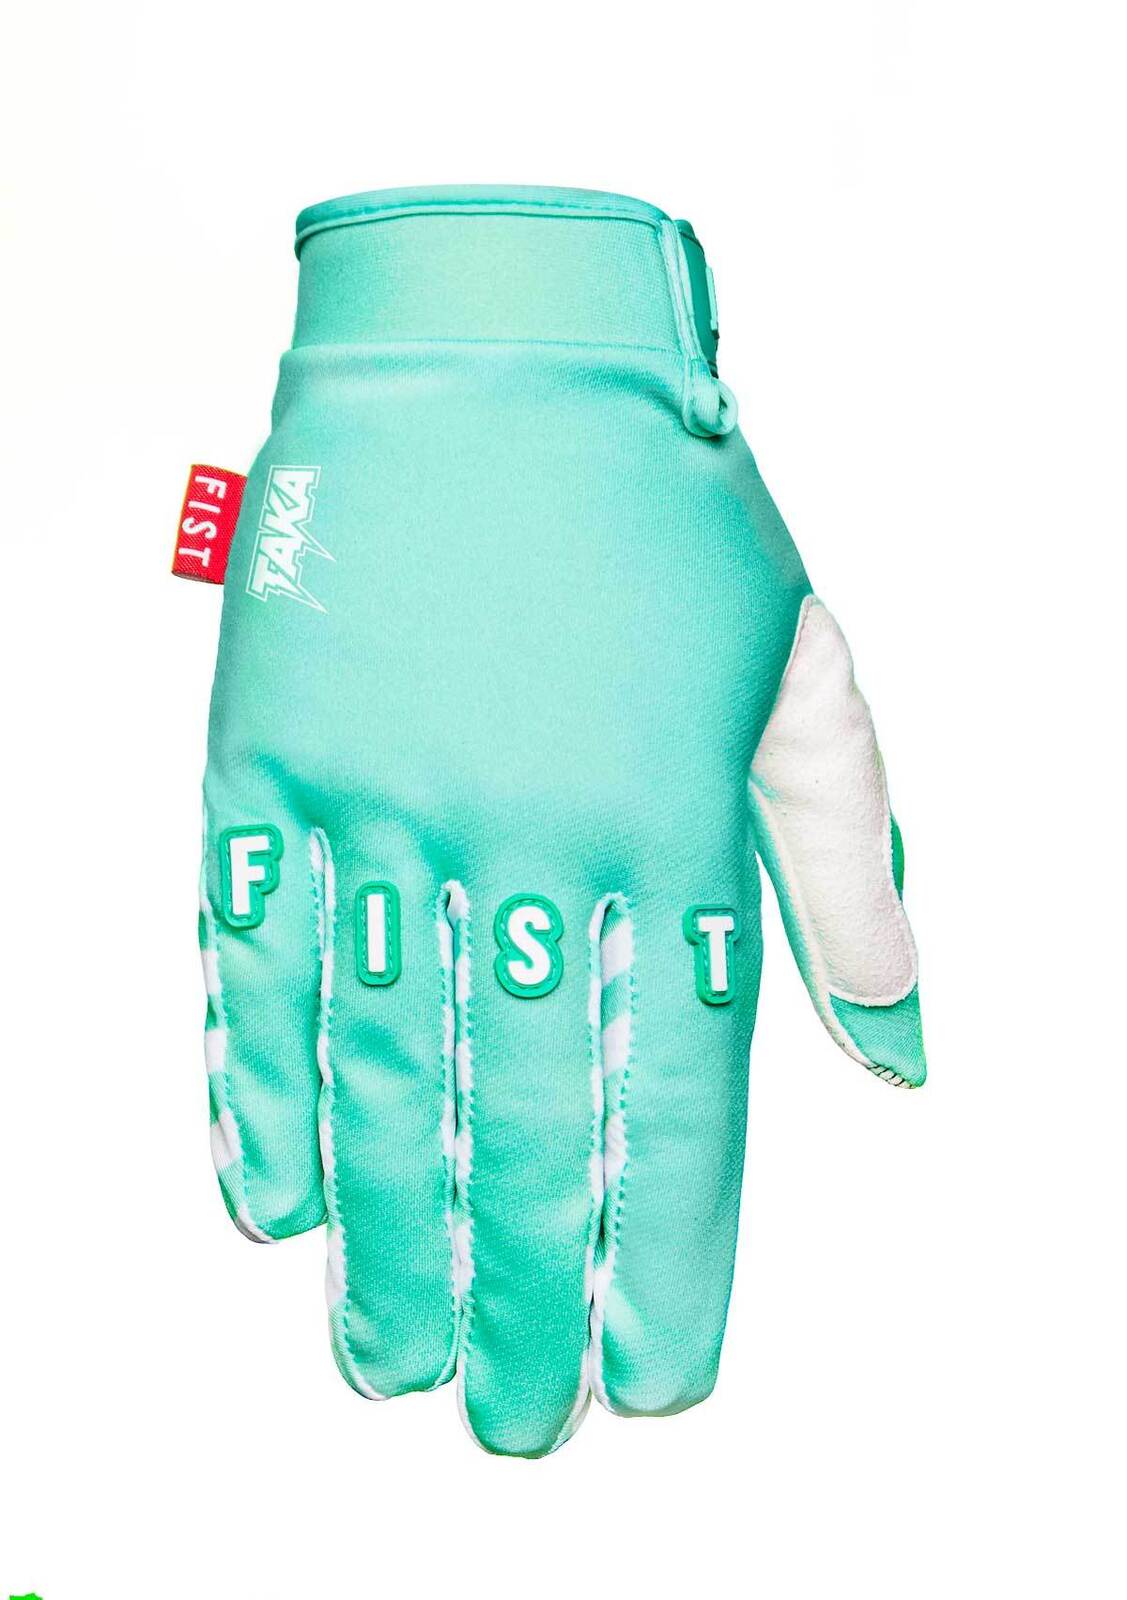 Fist Handwear Stocker Glove Full Finger Red Medium